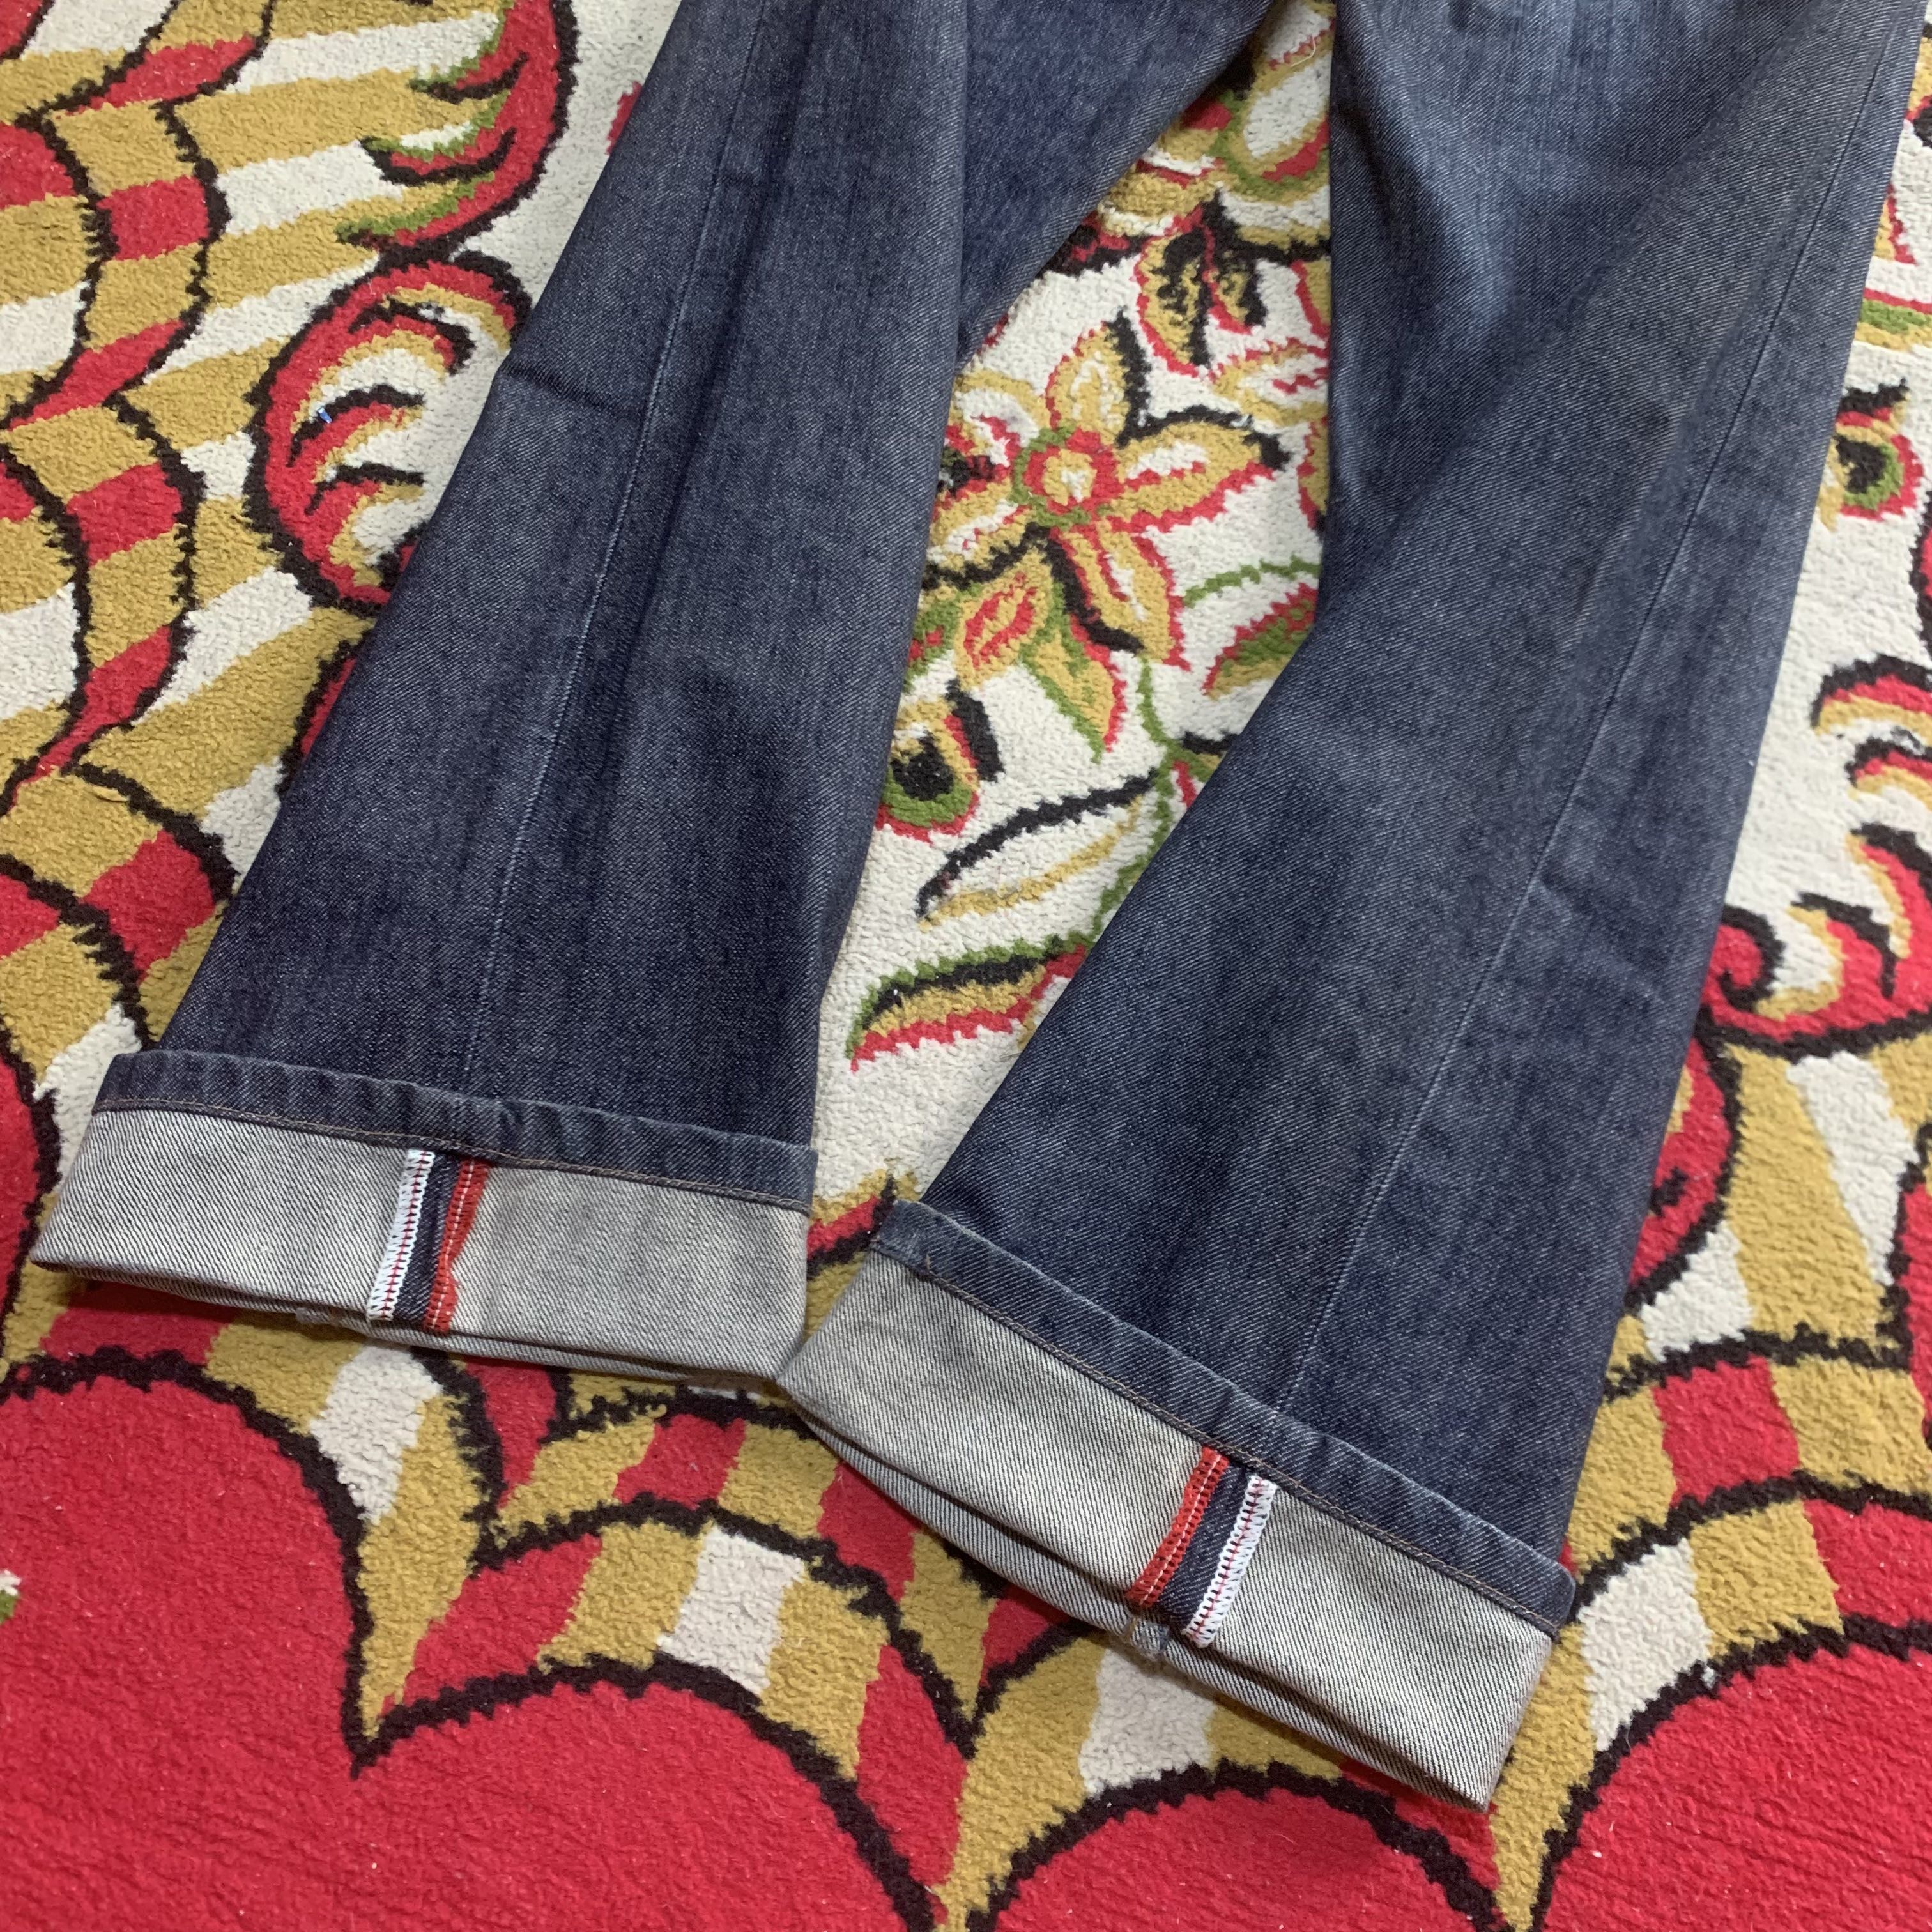 JAPANESE BRAND 🔥 Evisu Genes DenimMaster Selvedge Jeans - 4